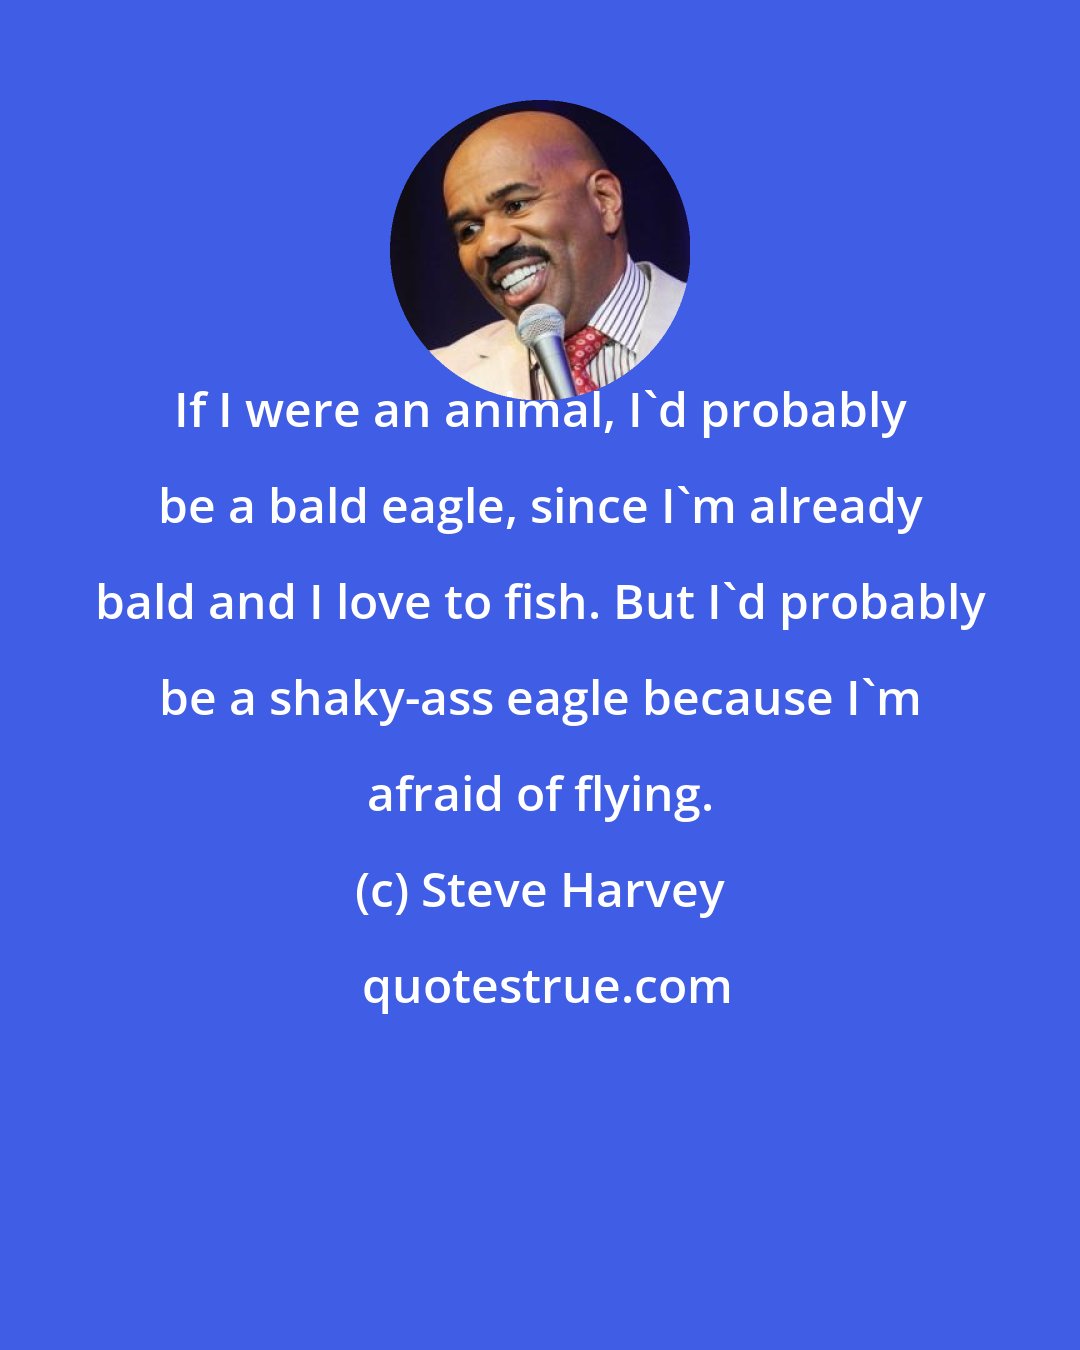 Steve Harvey: If I were an animal, I'd probably be a bald eagle, since I'm already bald and I love to fish. But I'd probably be a shaky-ass eagle because I'm afraid of flying.